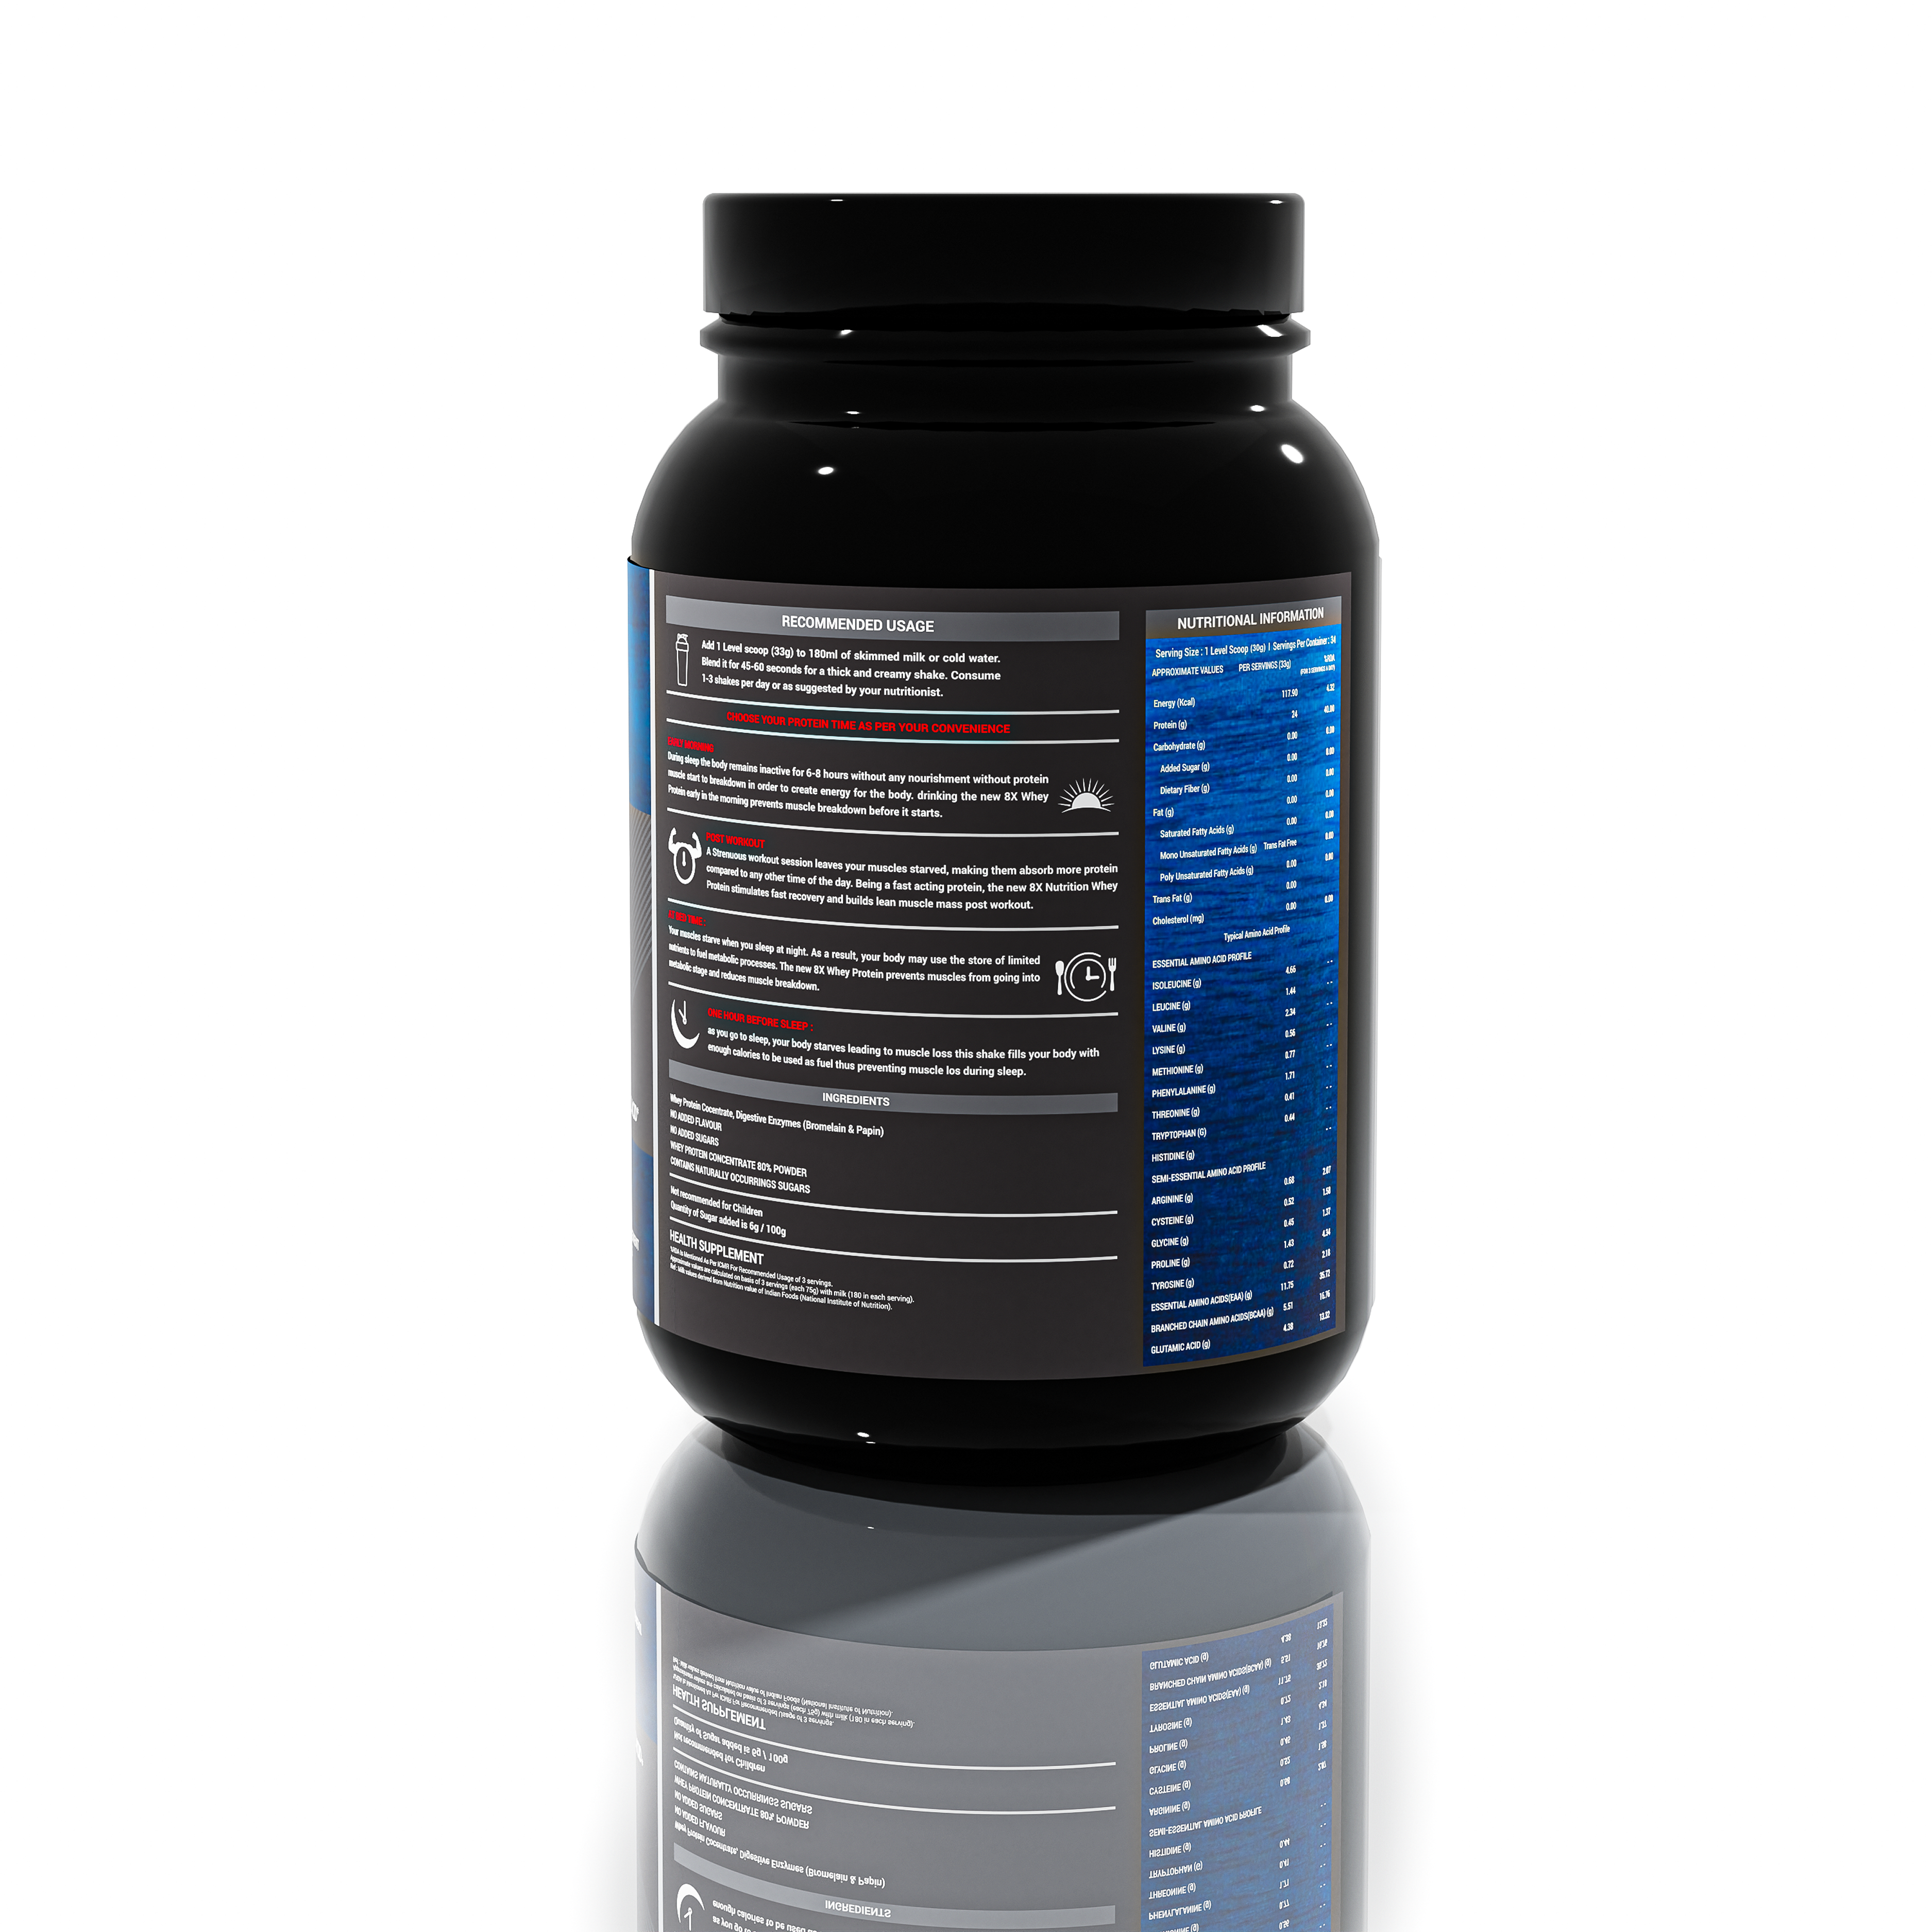 8X Nutrition Raw Whey Protein Supplement Powder (2.2 LBS)